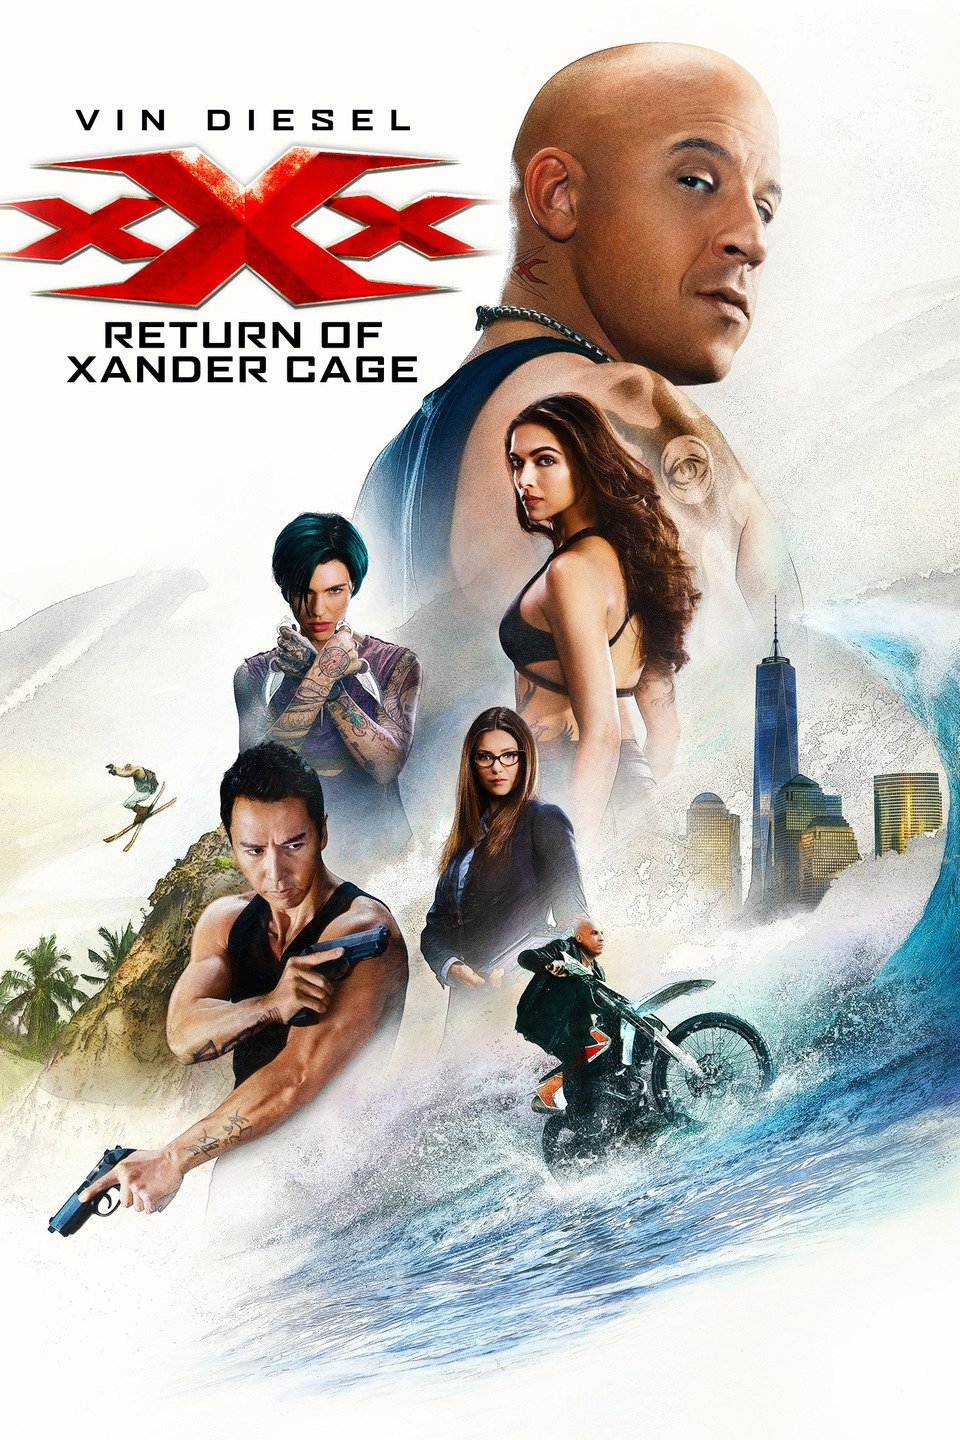 Sxxxxx Xxxx Movies - xXx: Return of Xander Cage - Rotten Tomatoes